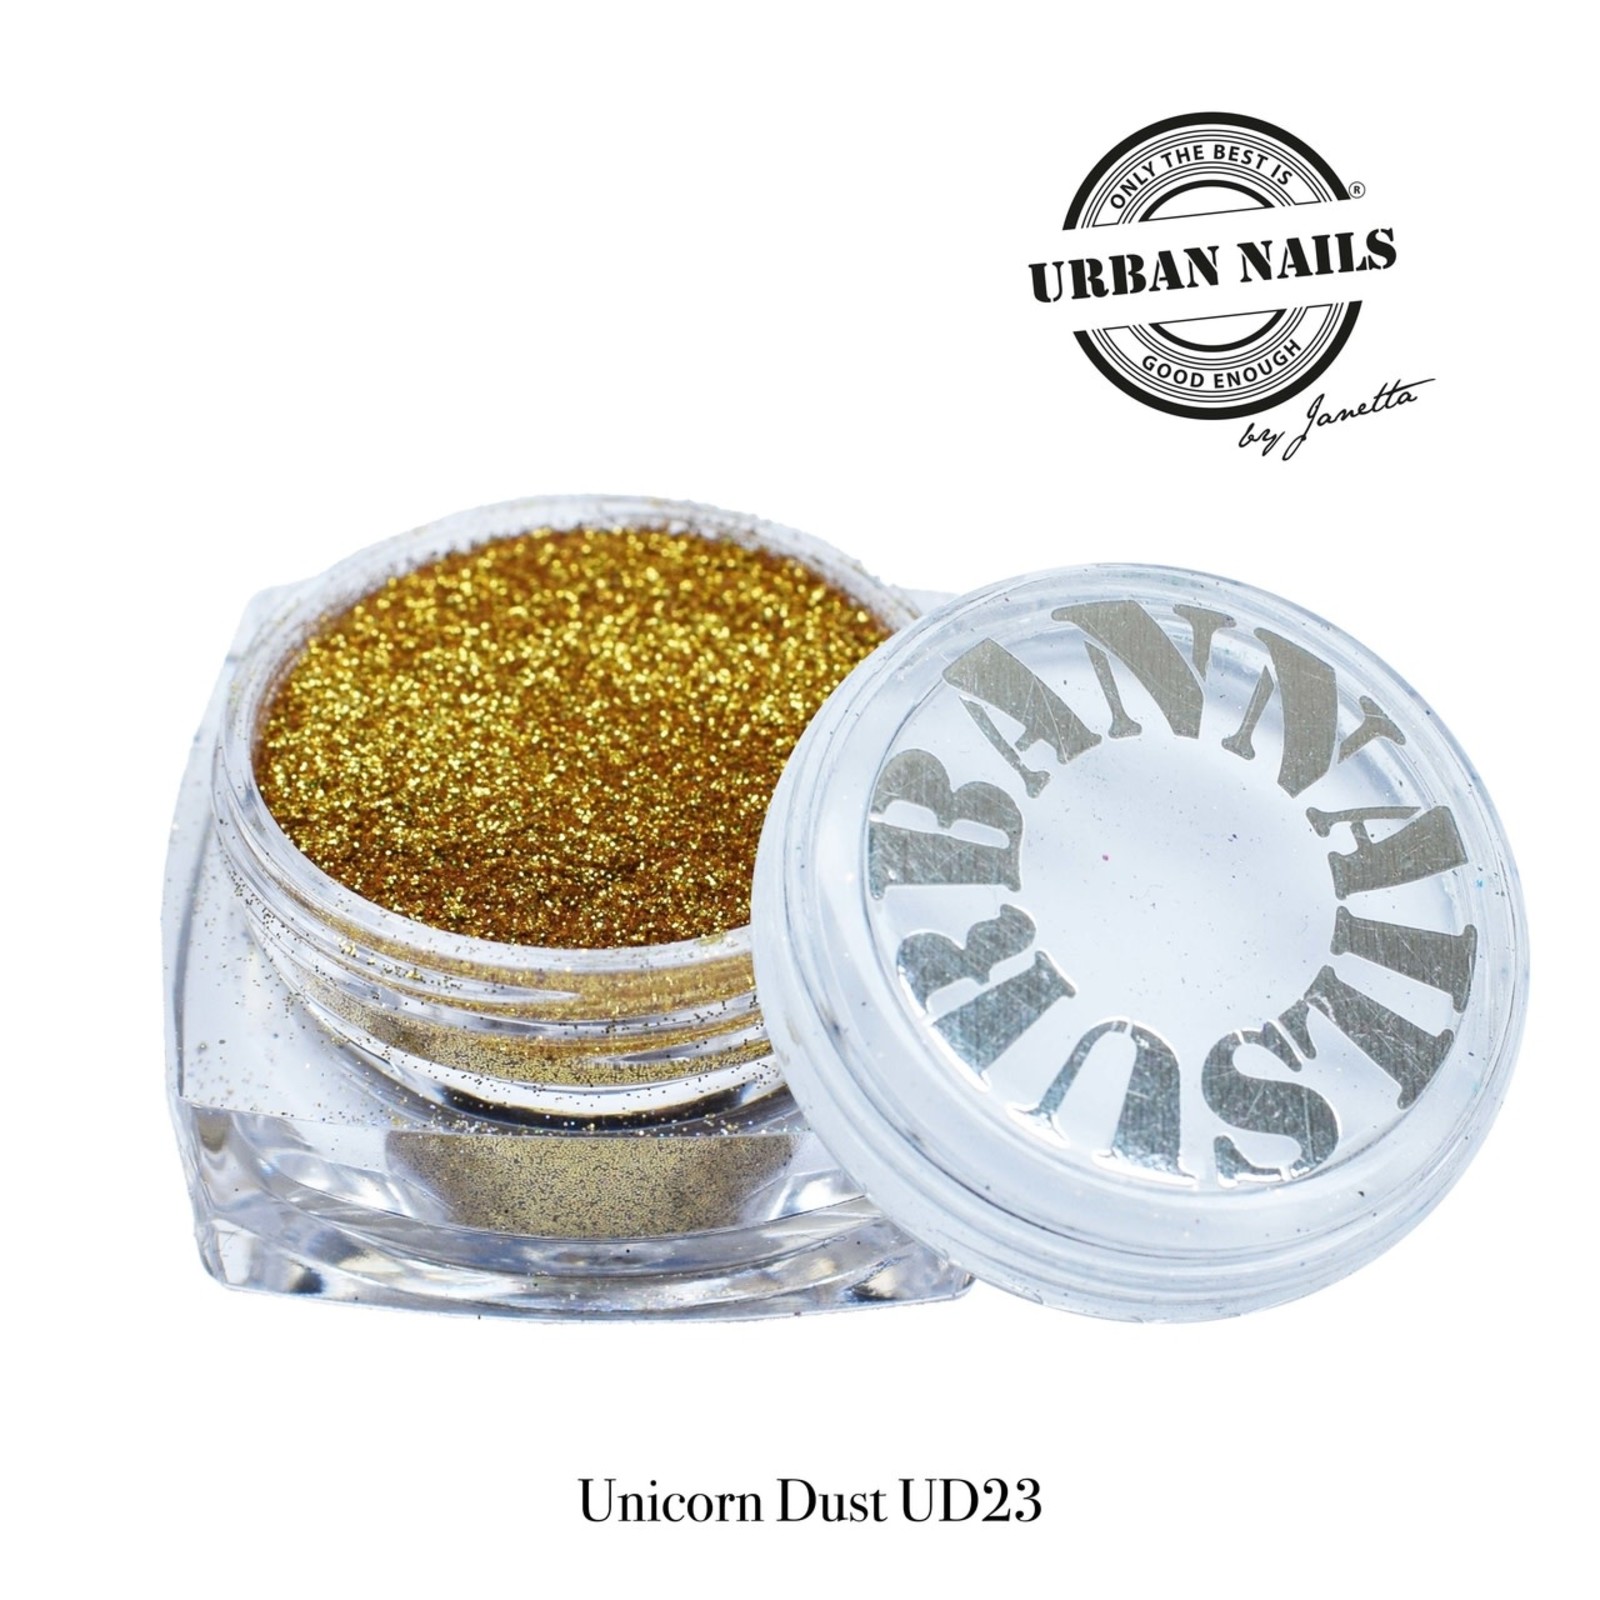 Urban nails Unicorn Dust UD23